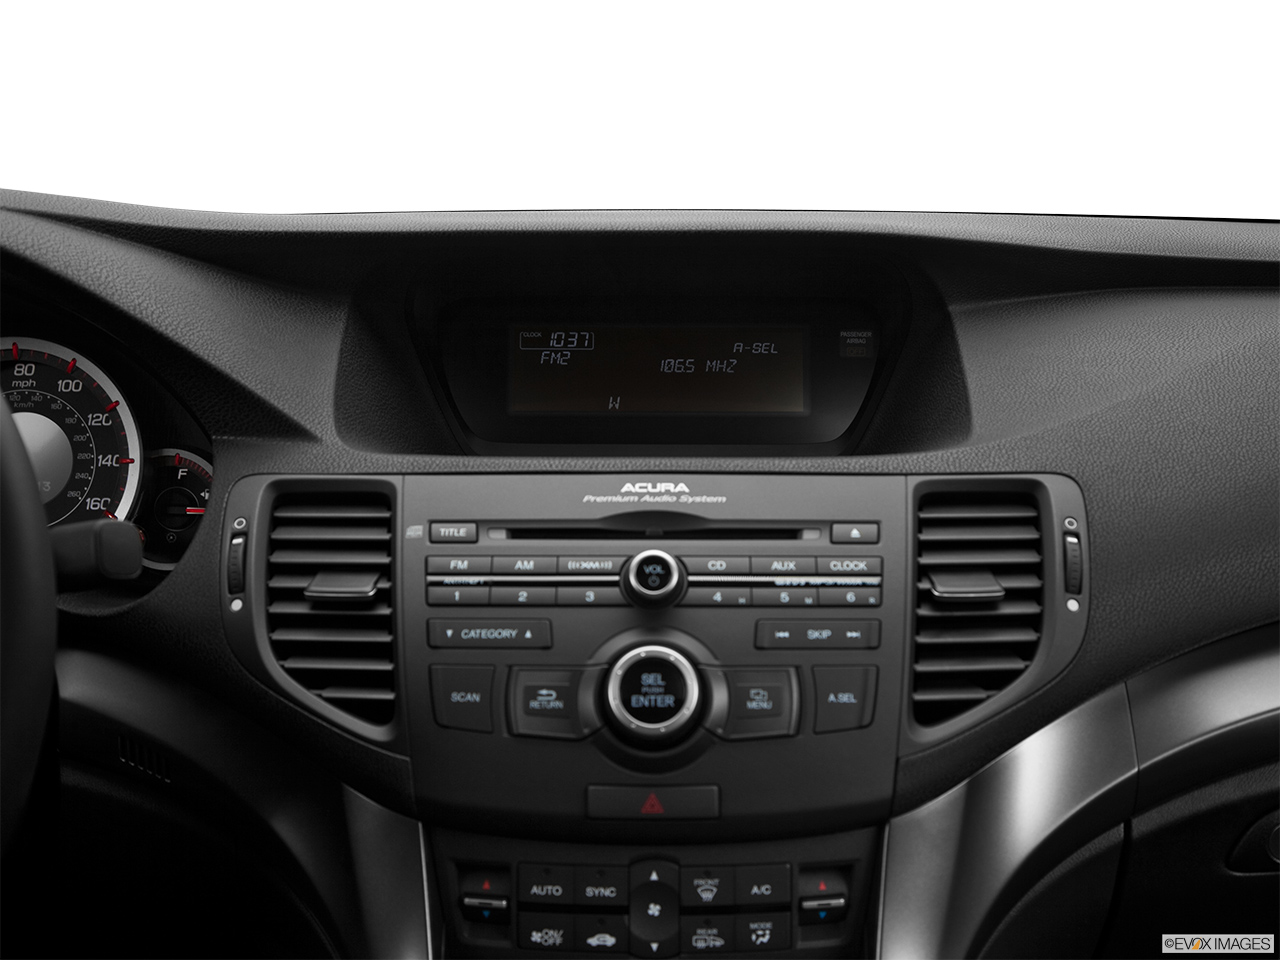 2013 Acura TSX Special Edition 5-Speed Automatic Interior Bonus Shots (no set spec) 